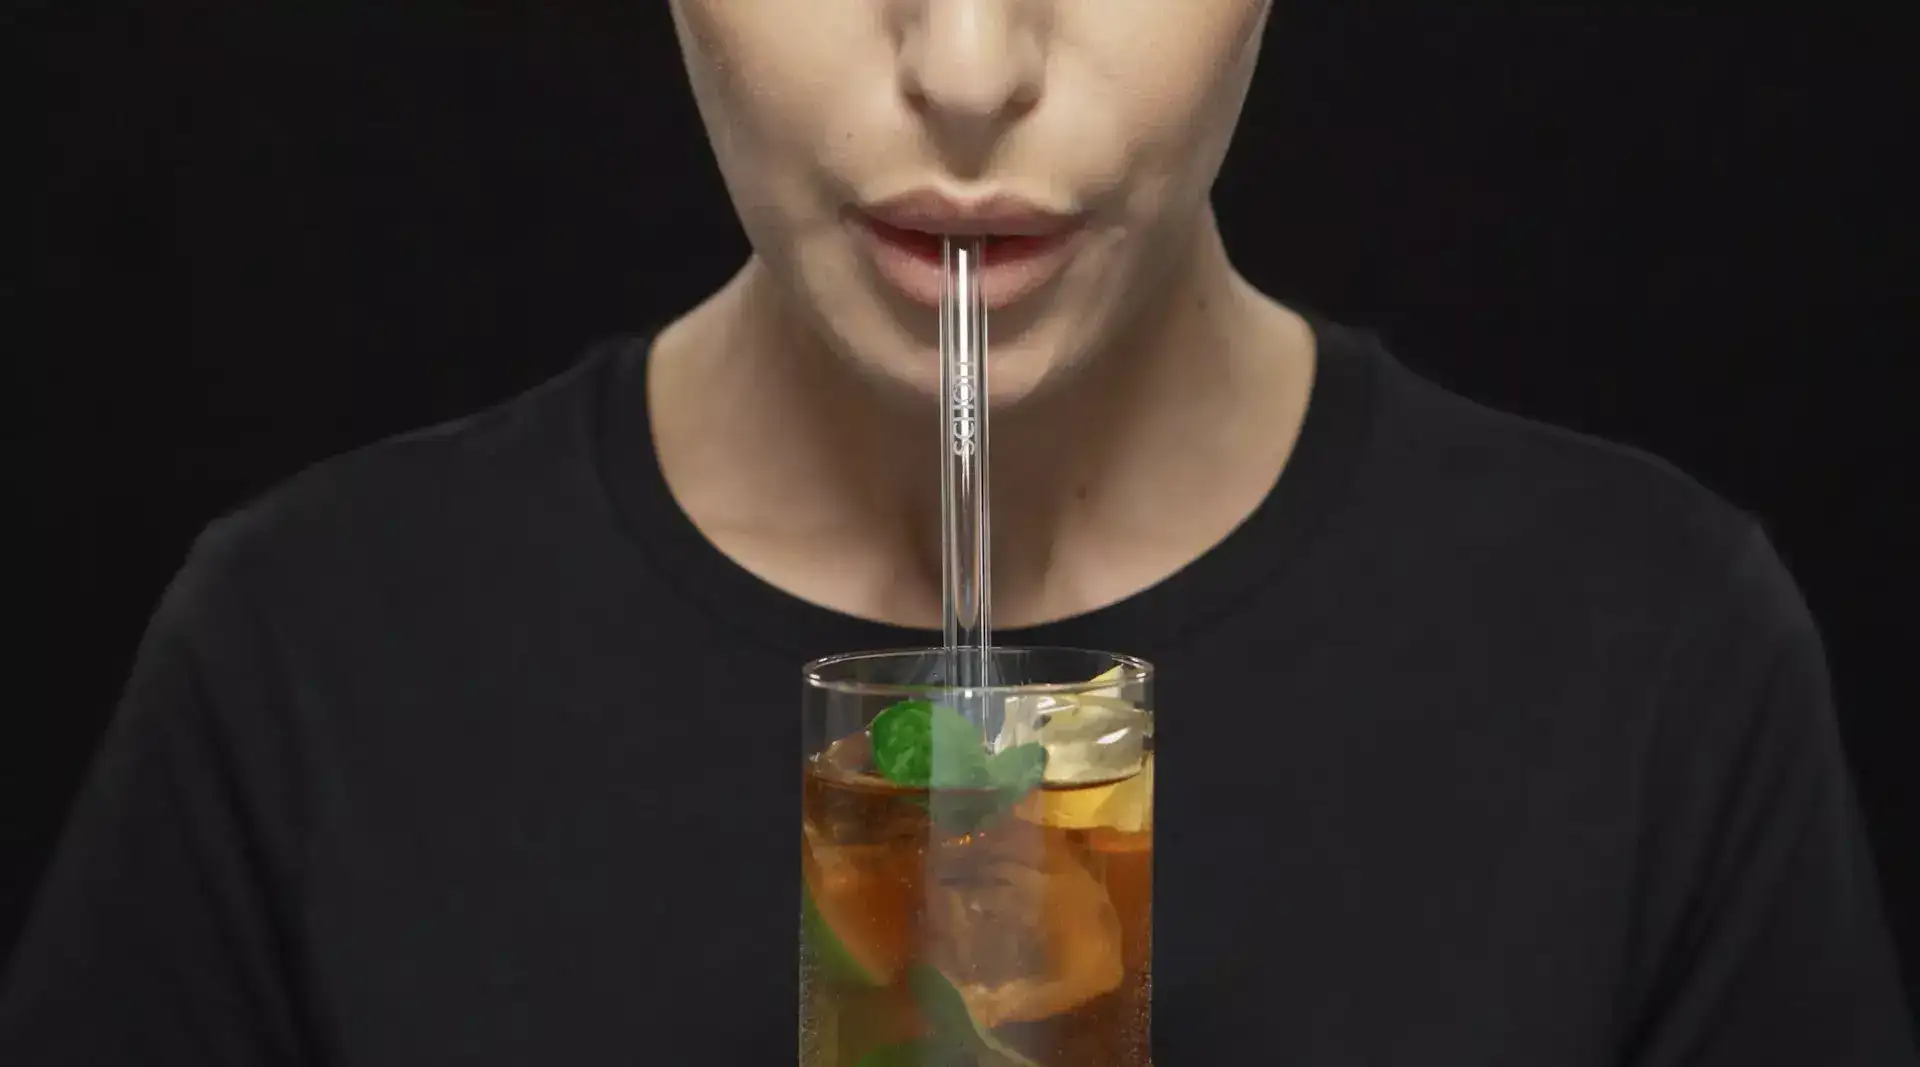 Female drinking drink through a glass straw	